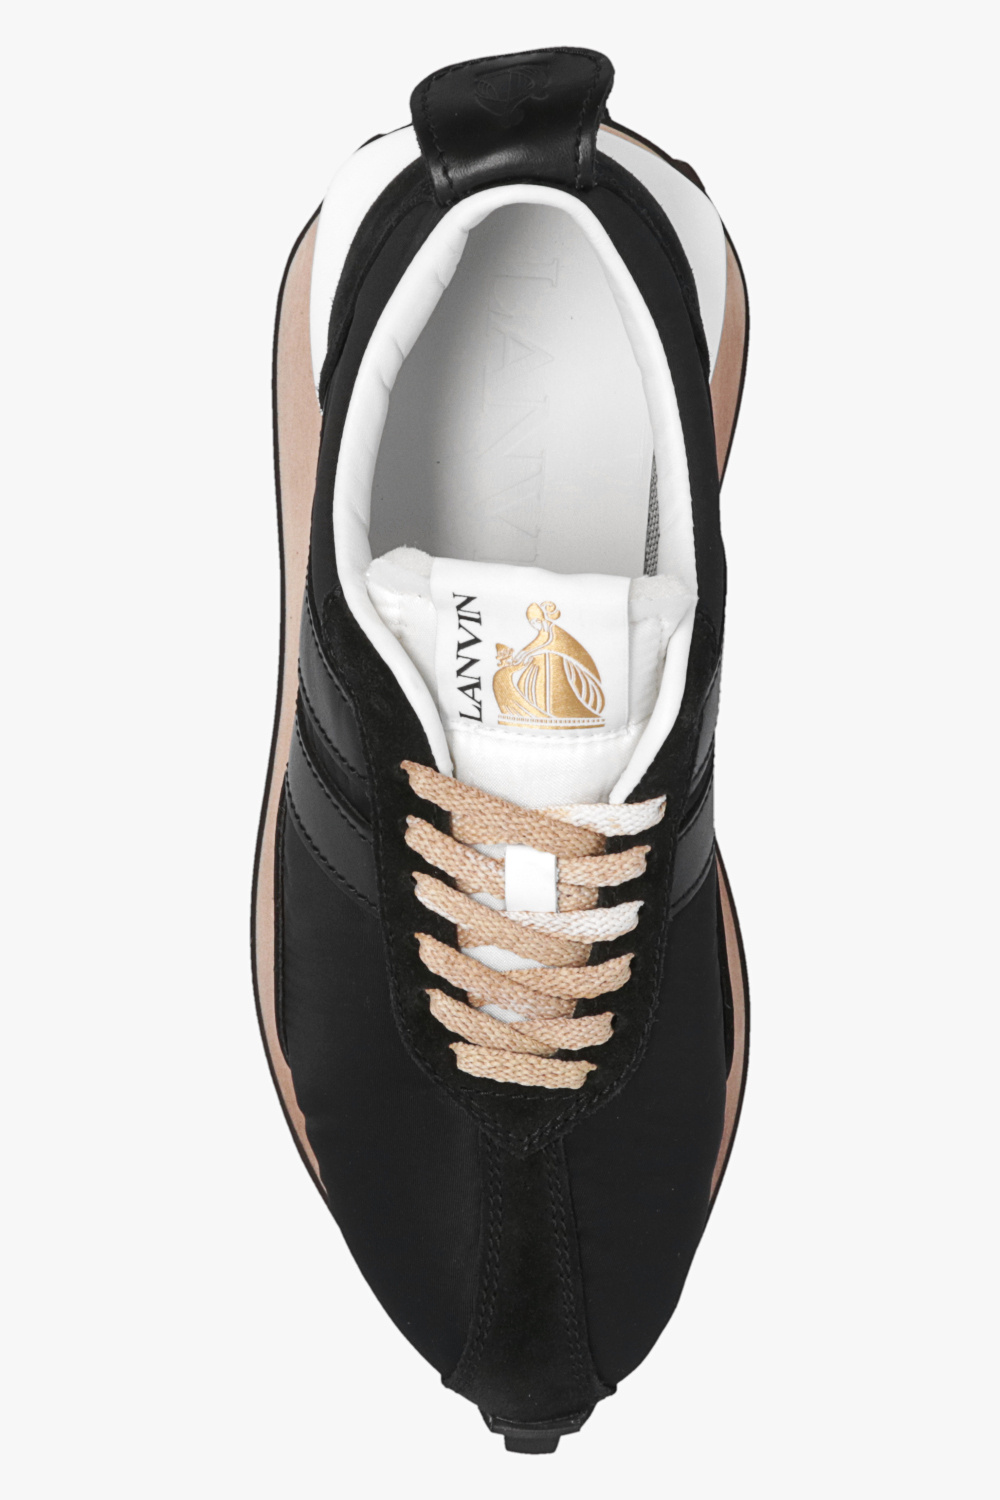 Lanvin ‘Running’ sneakers